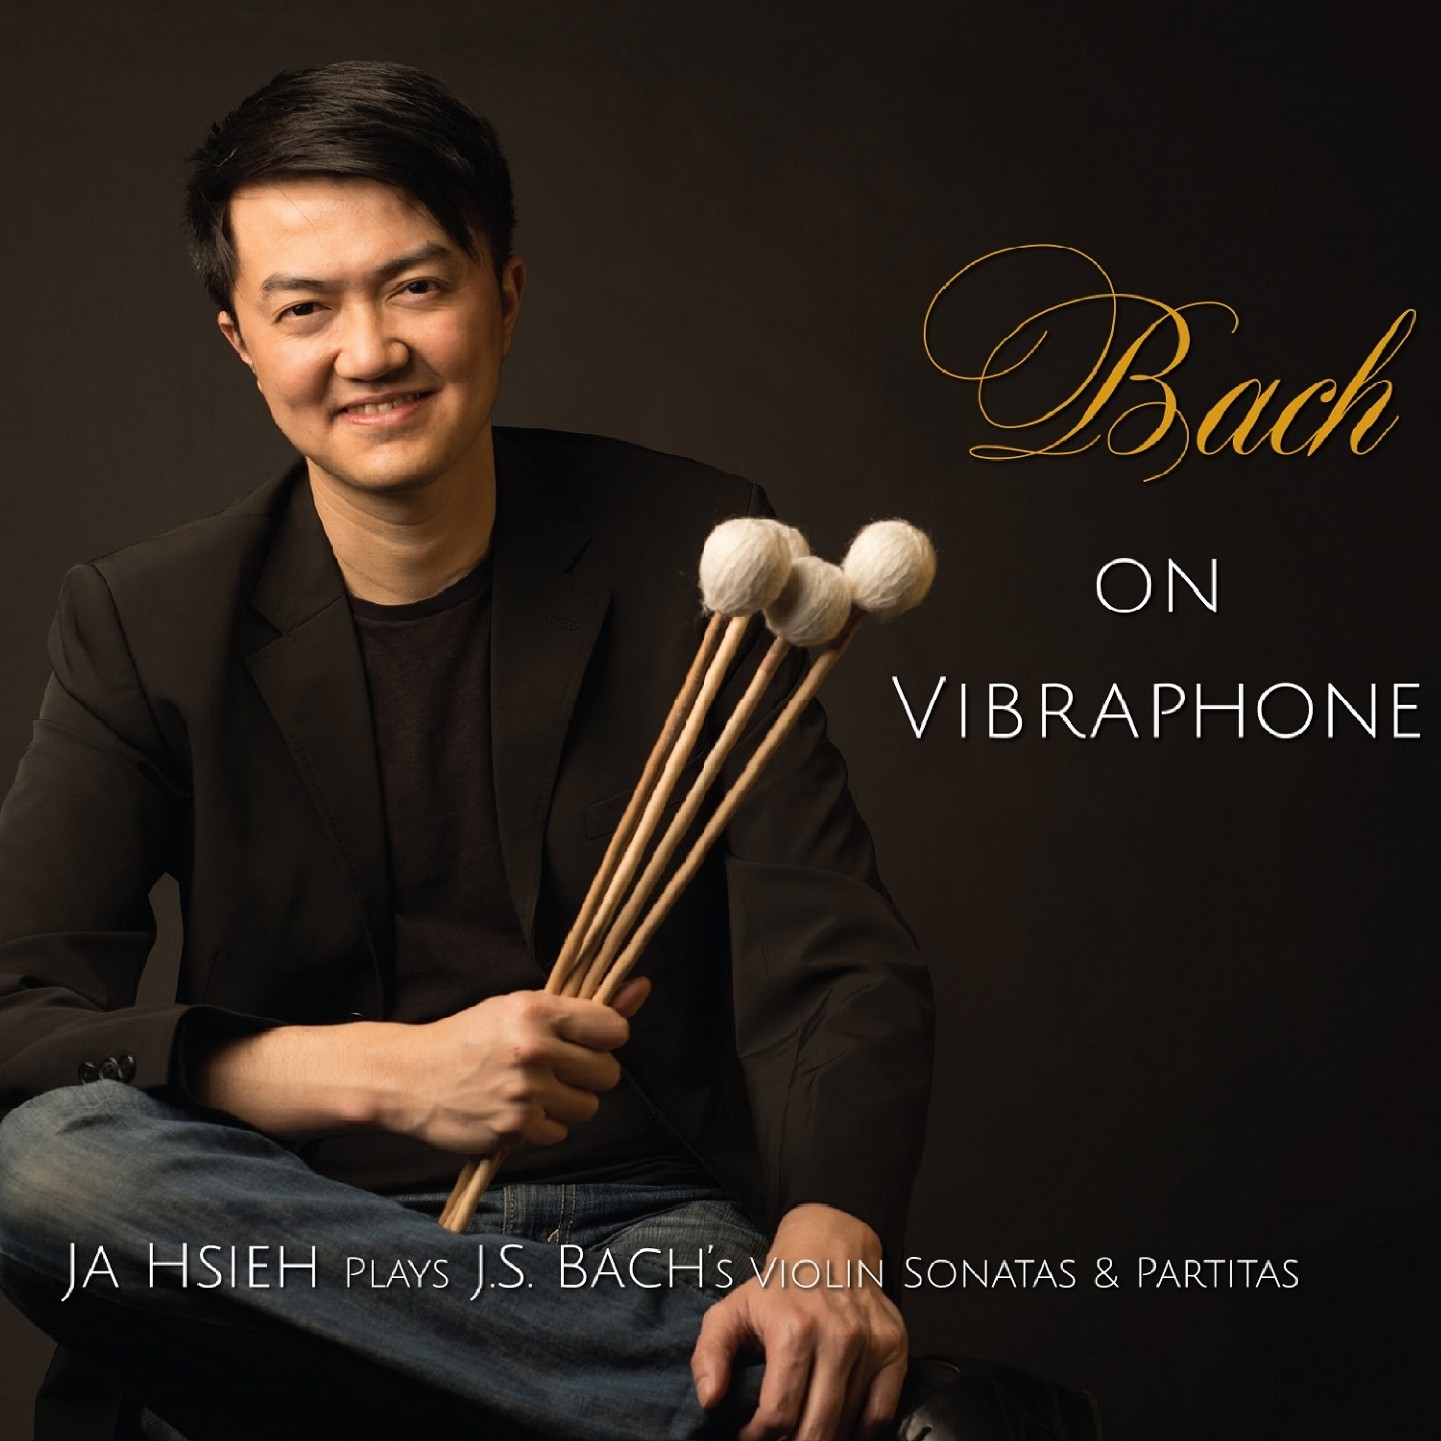 Bach on Vibraphone - Ja Hsieh Plays J.S. Bach's Violin Sonatas & Partitas